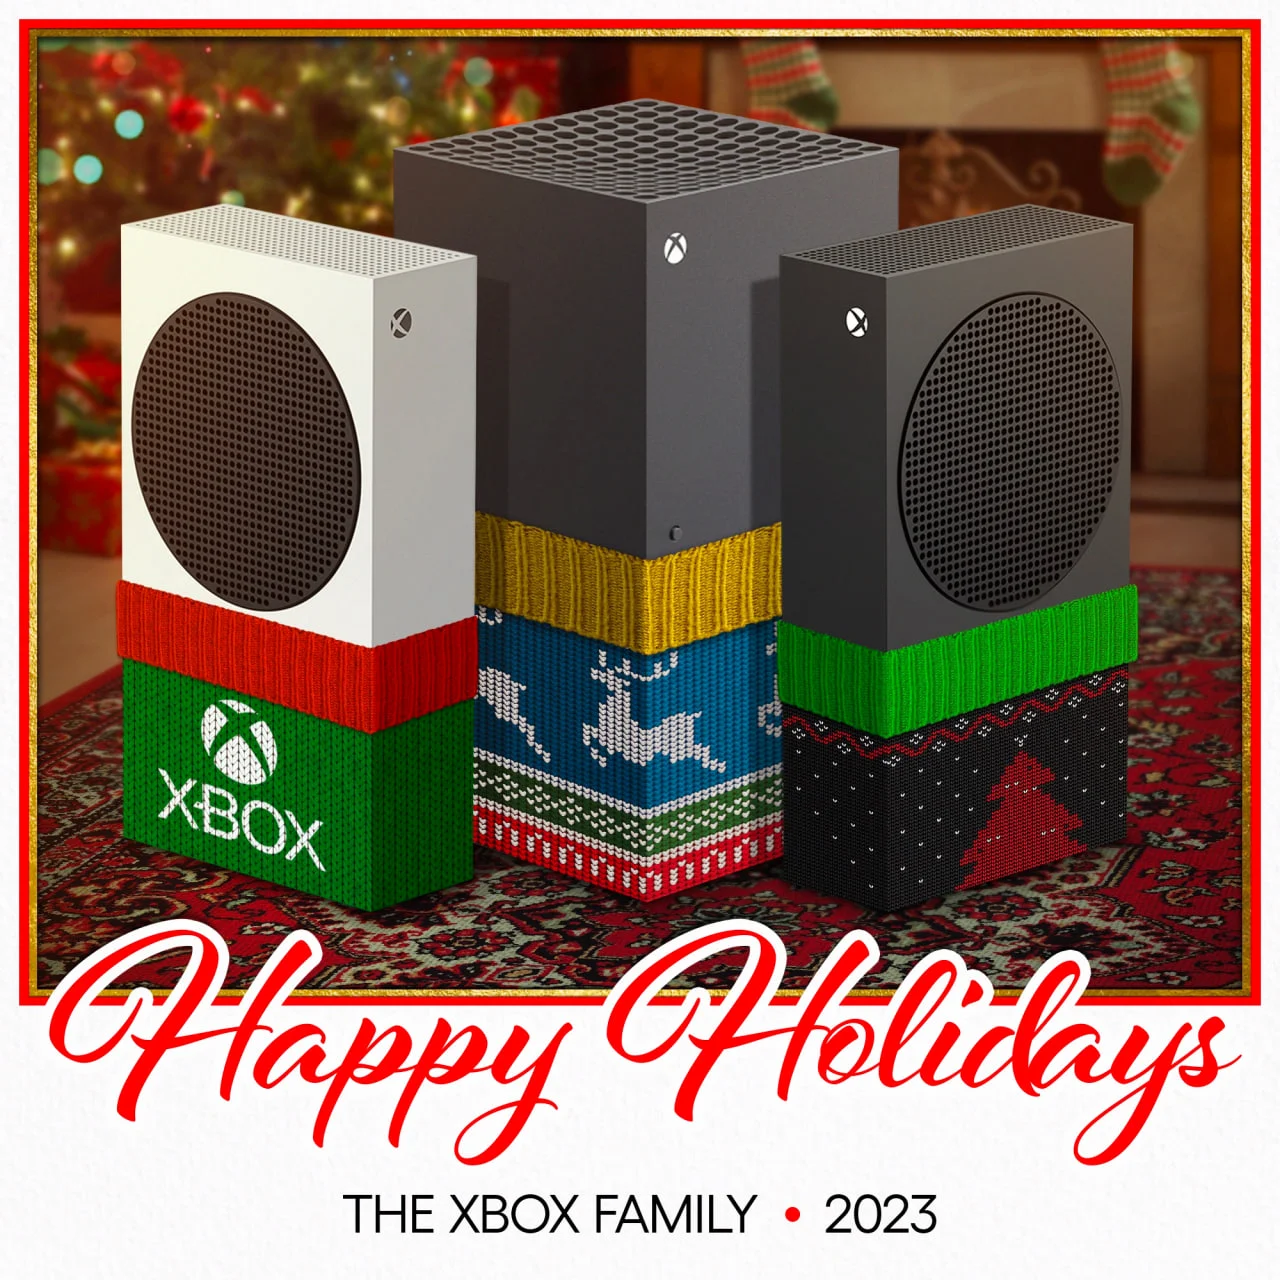 Sony и Xbox с Nintendo поздравили игроков с новогодними праздниками - фото 2